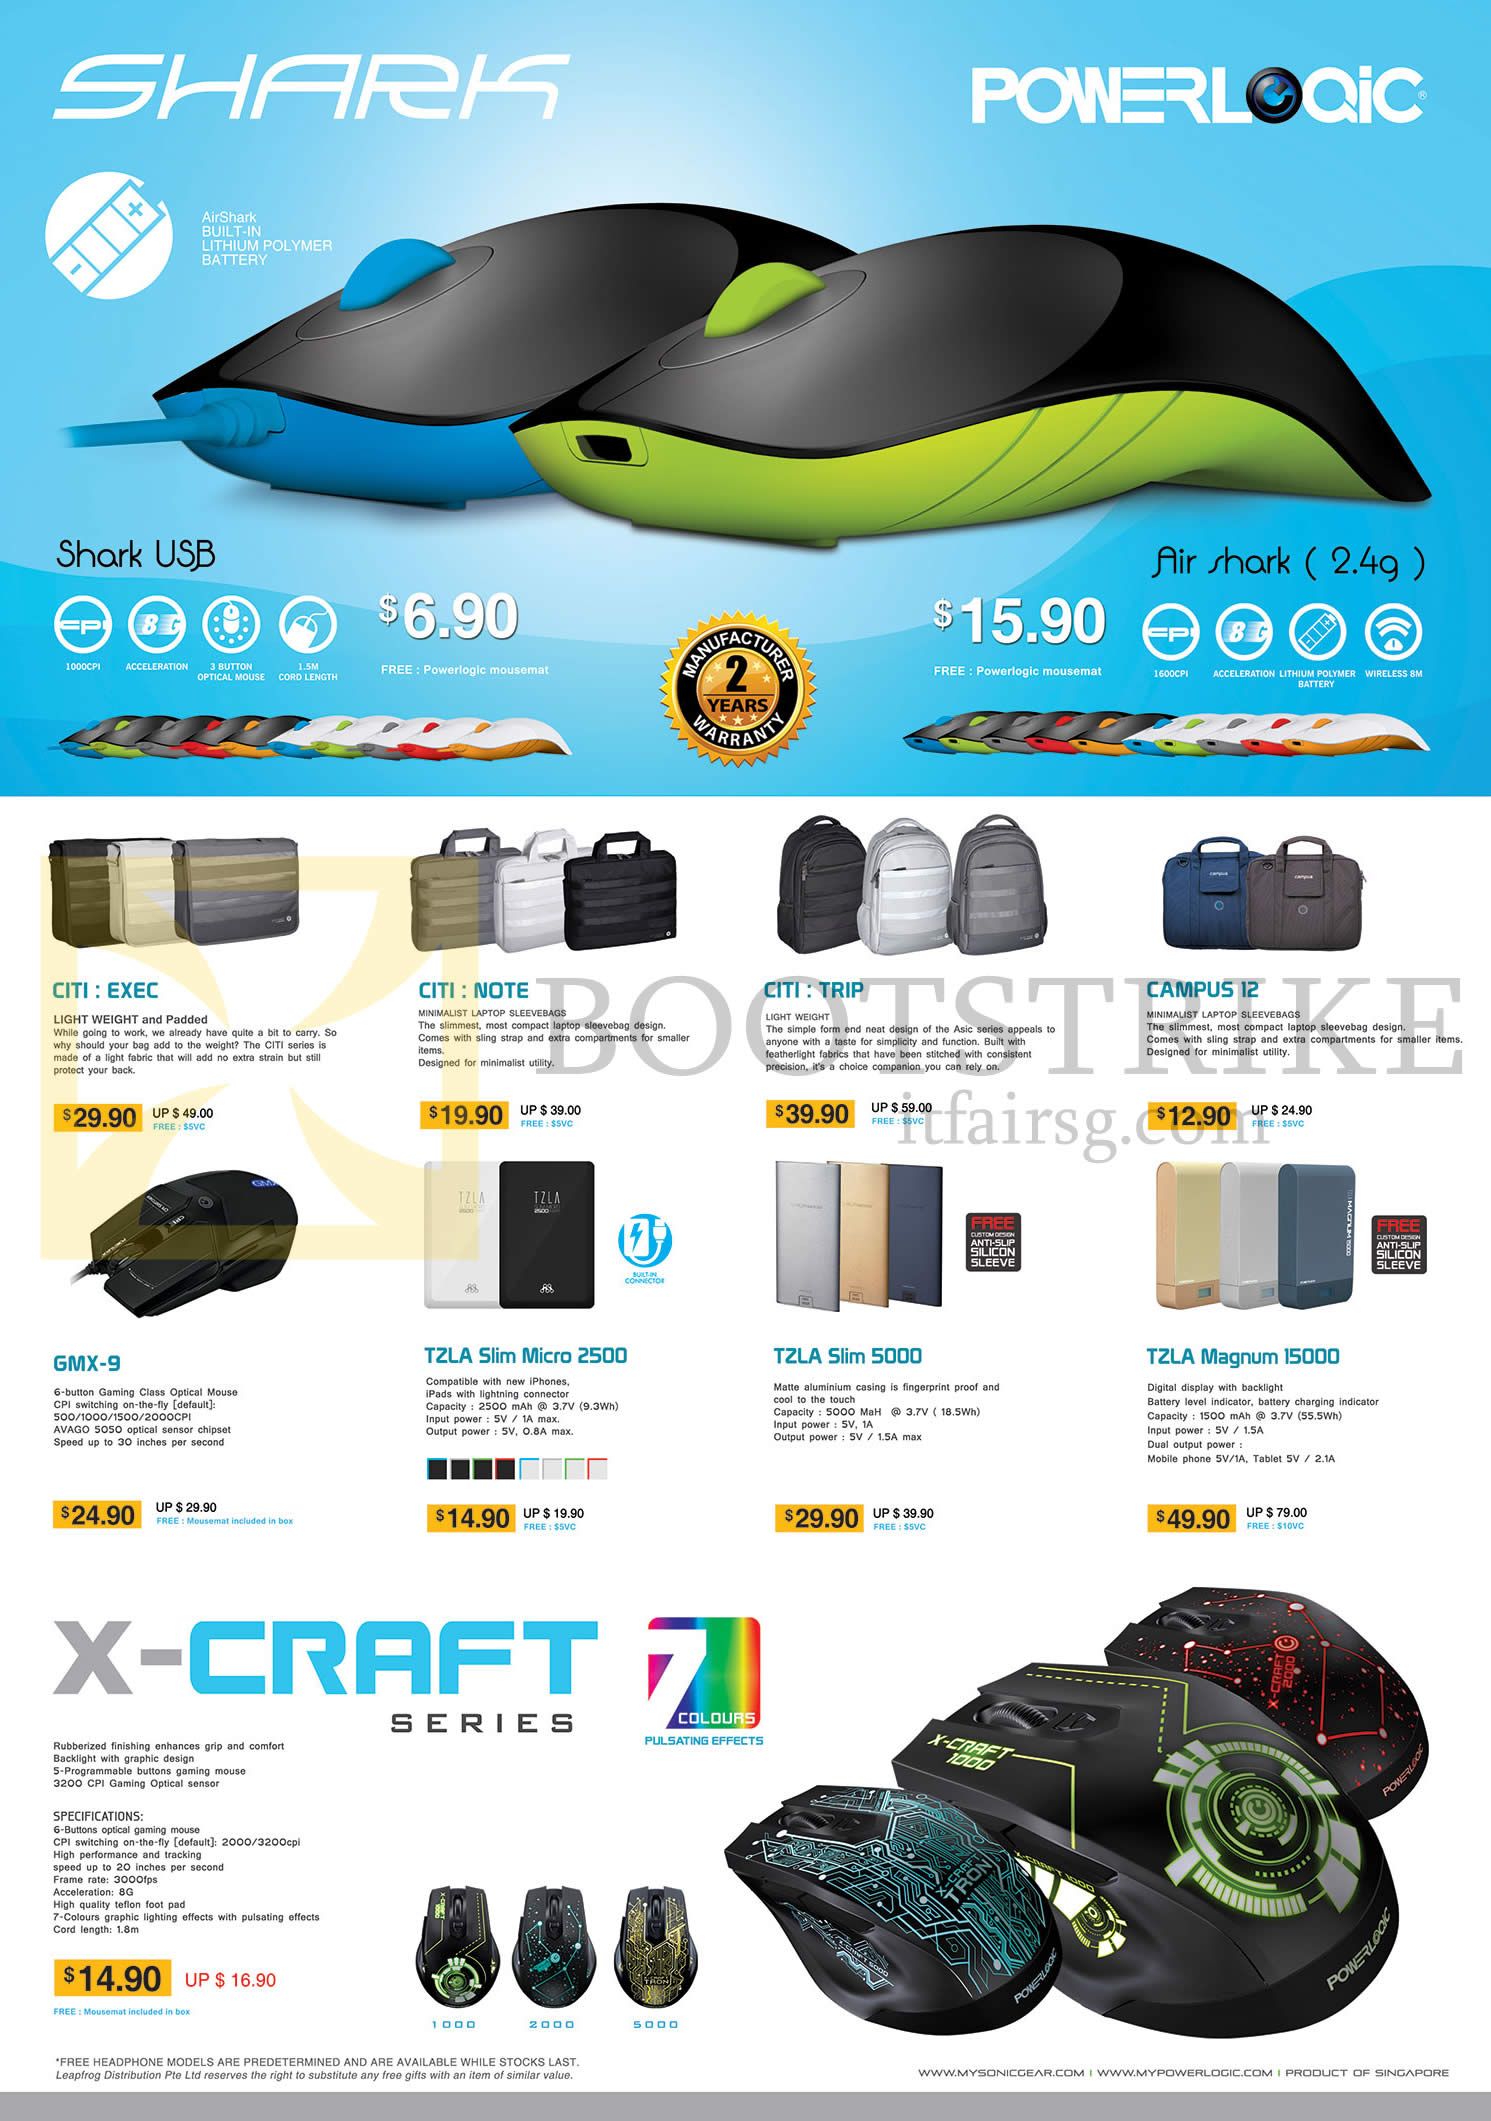 IT SHOW 2015 price list image brochure of Leapfrog Powerlogic Shark Bags, Power Banks, Mouse, Citi Exec, Note, Trip, Campus 12, GMX-9, TZLA Slim Micro 2500, 5000, Magnum 15000, X Craft 7 Series